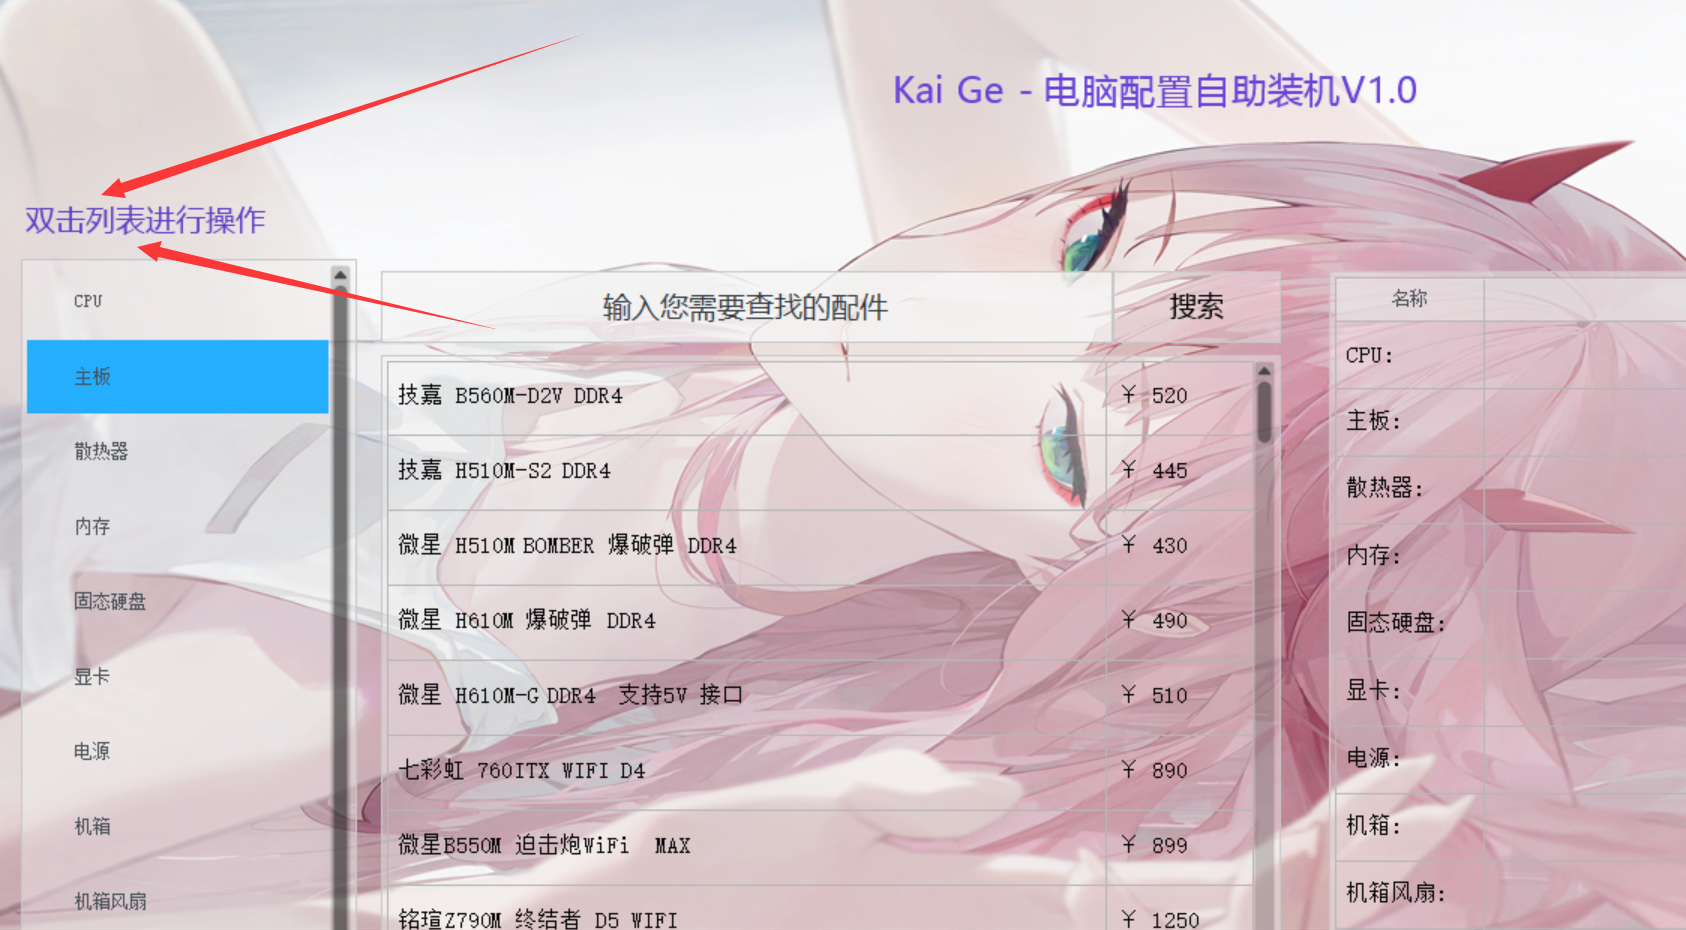 Kai Ge – 电脑配置自助装机报价V1.0